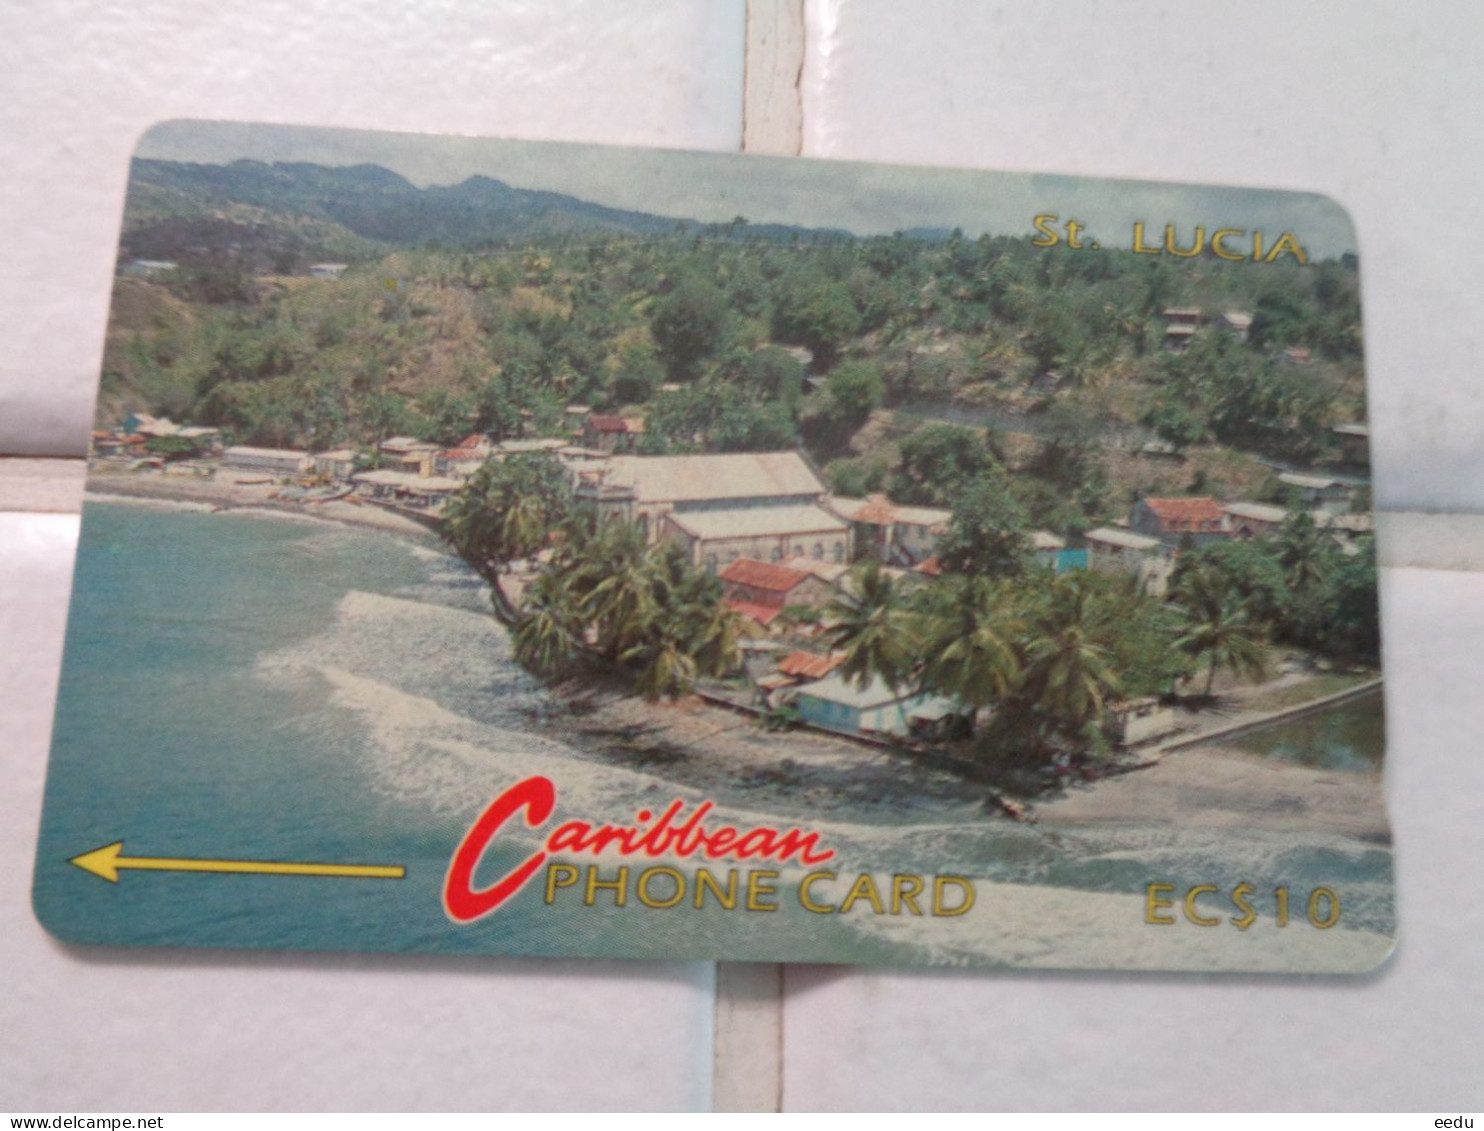 St.Lucia Phonecard - St. Lucia